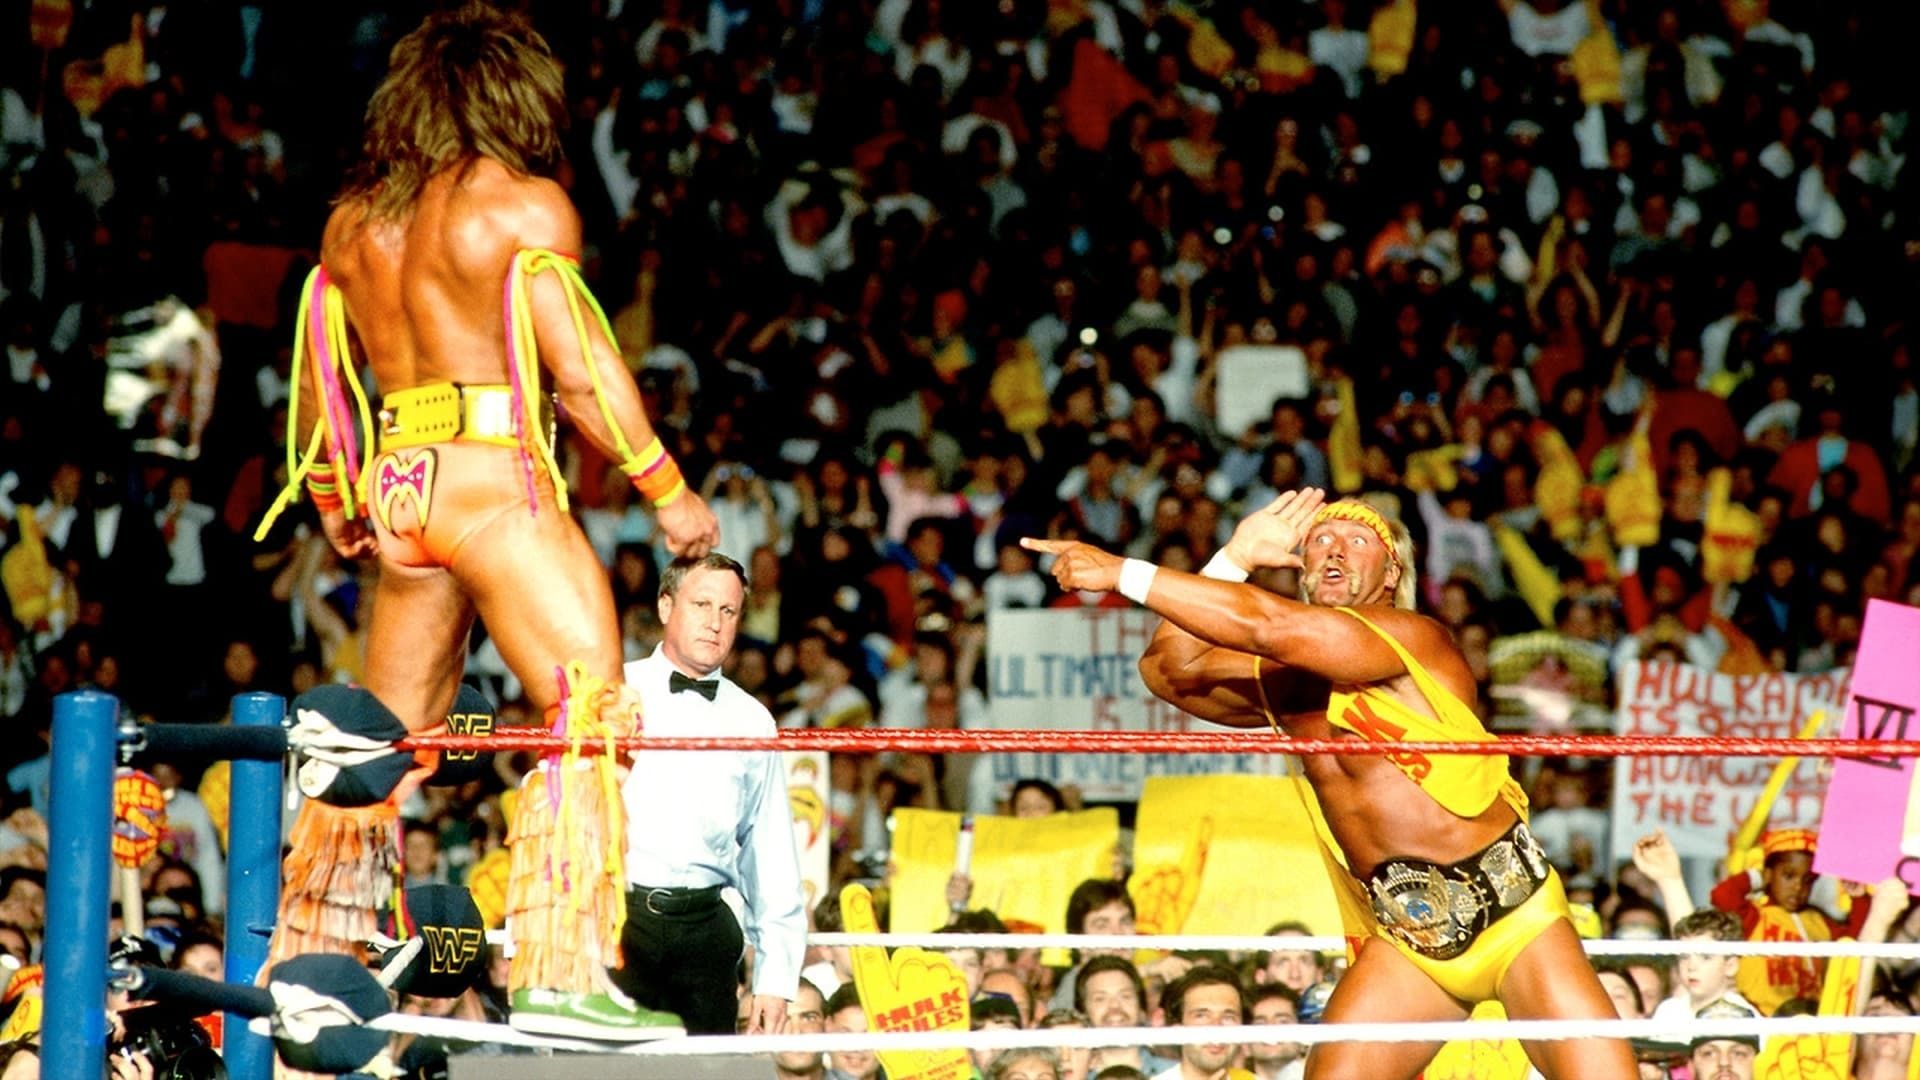 WrestleMania VI background